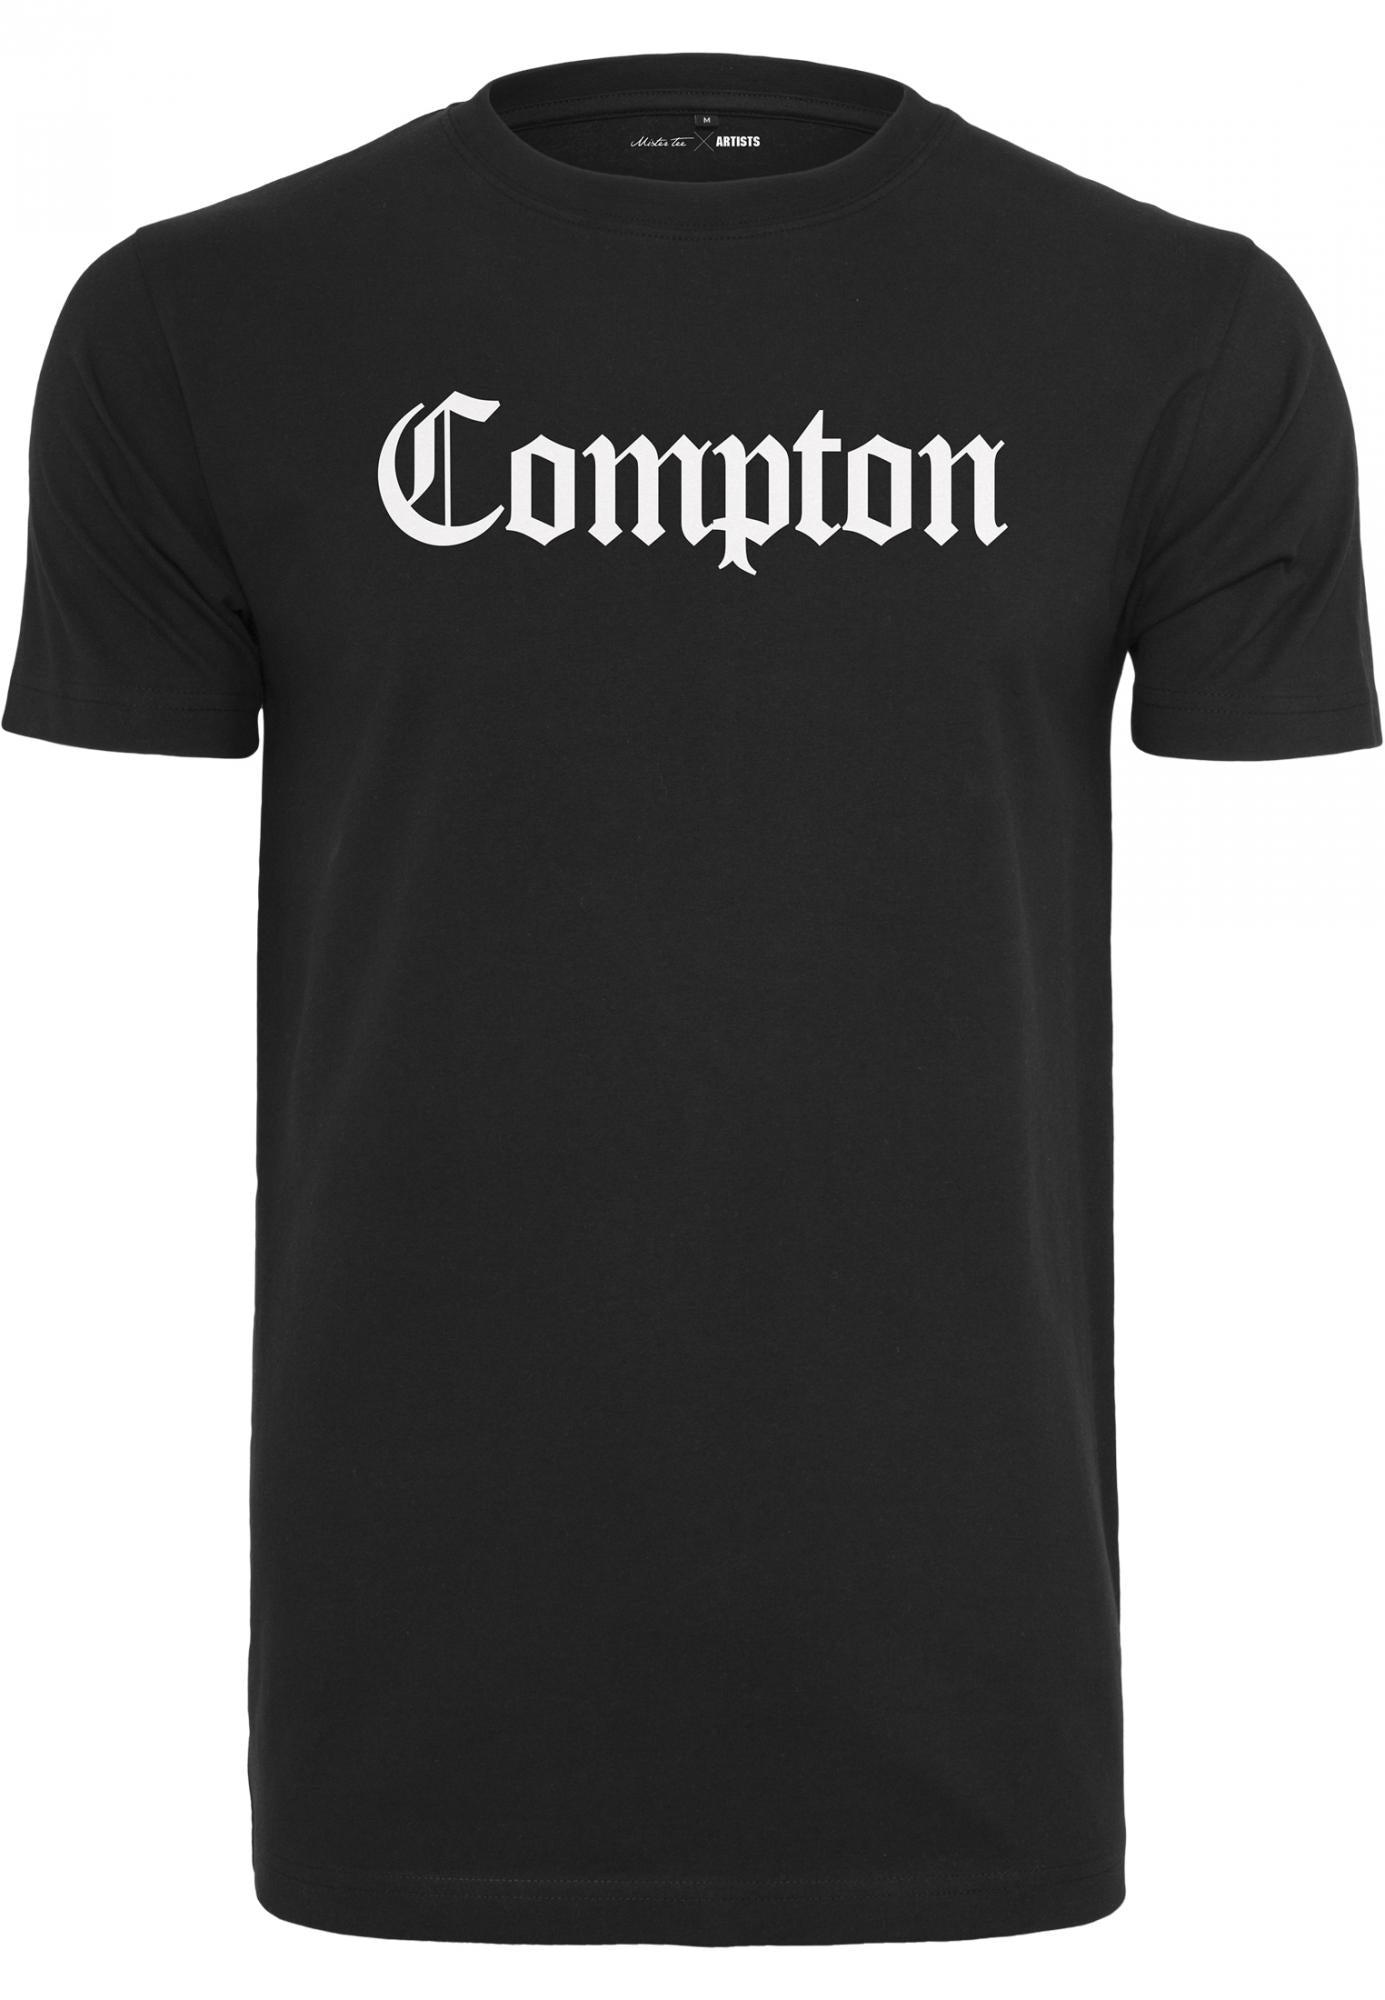 Mister Compton tee black - Shop-Tetuan